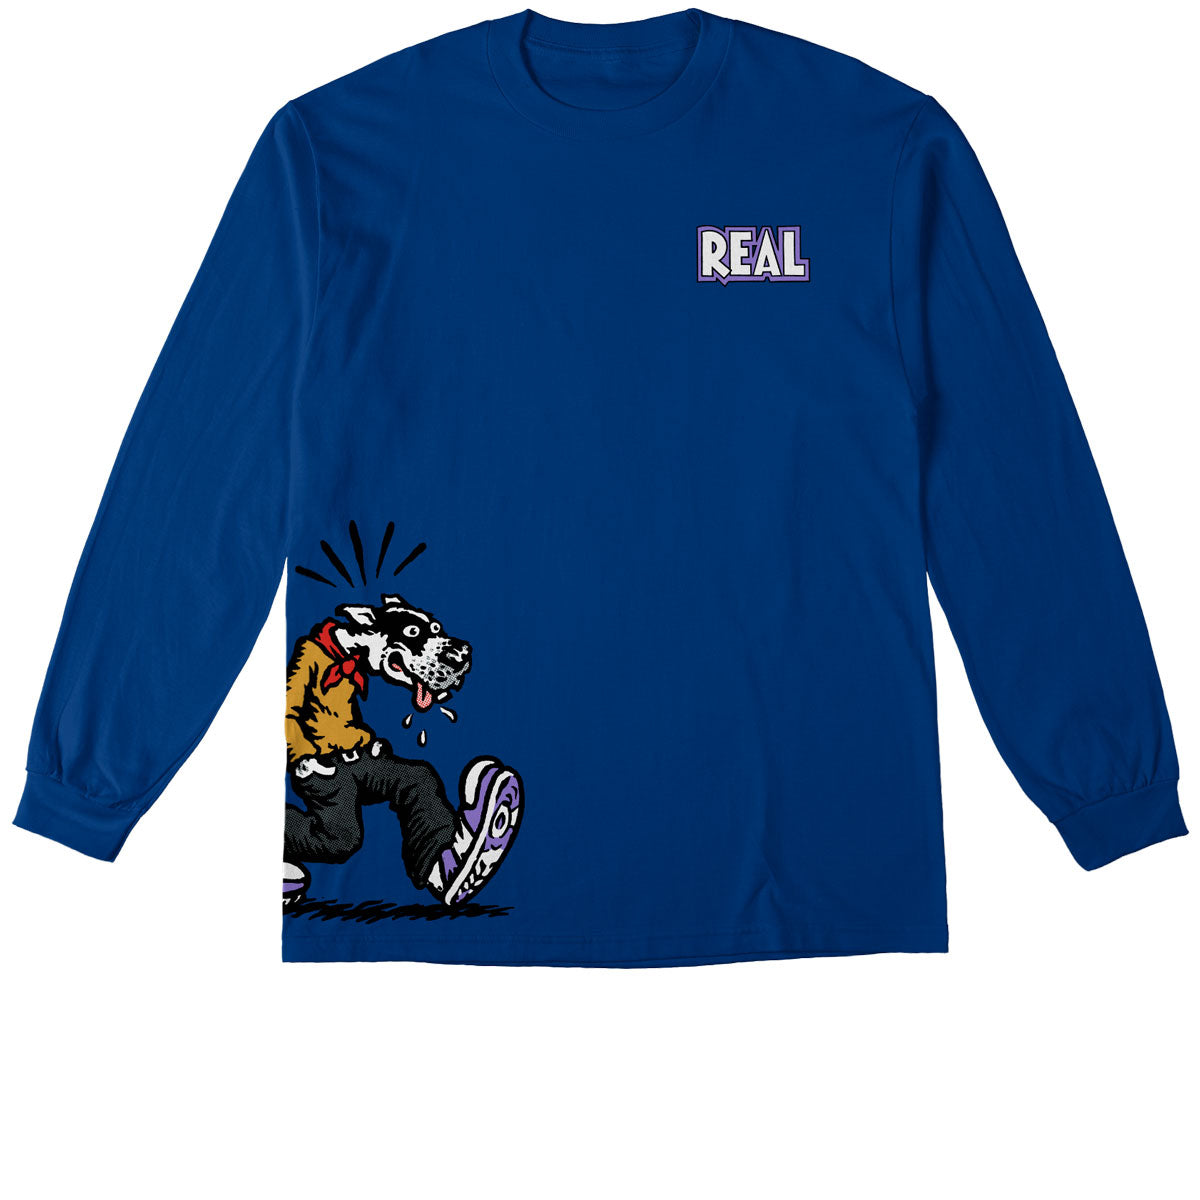 Real Comix Long Sleeve T-Shirt - Royal image 1